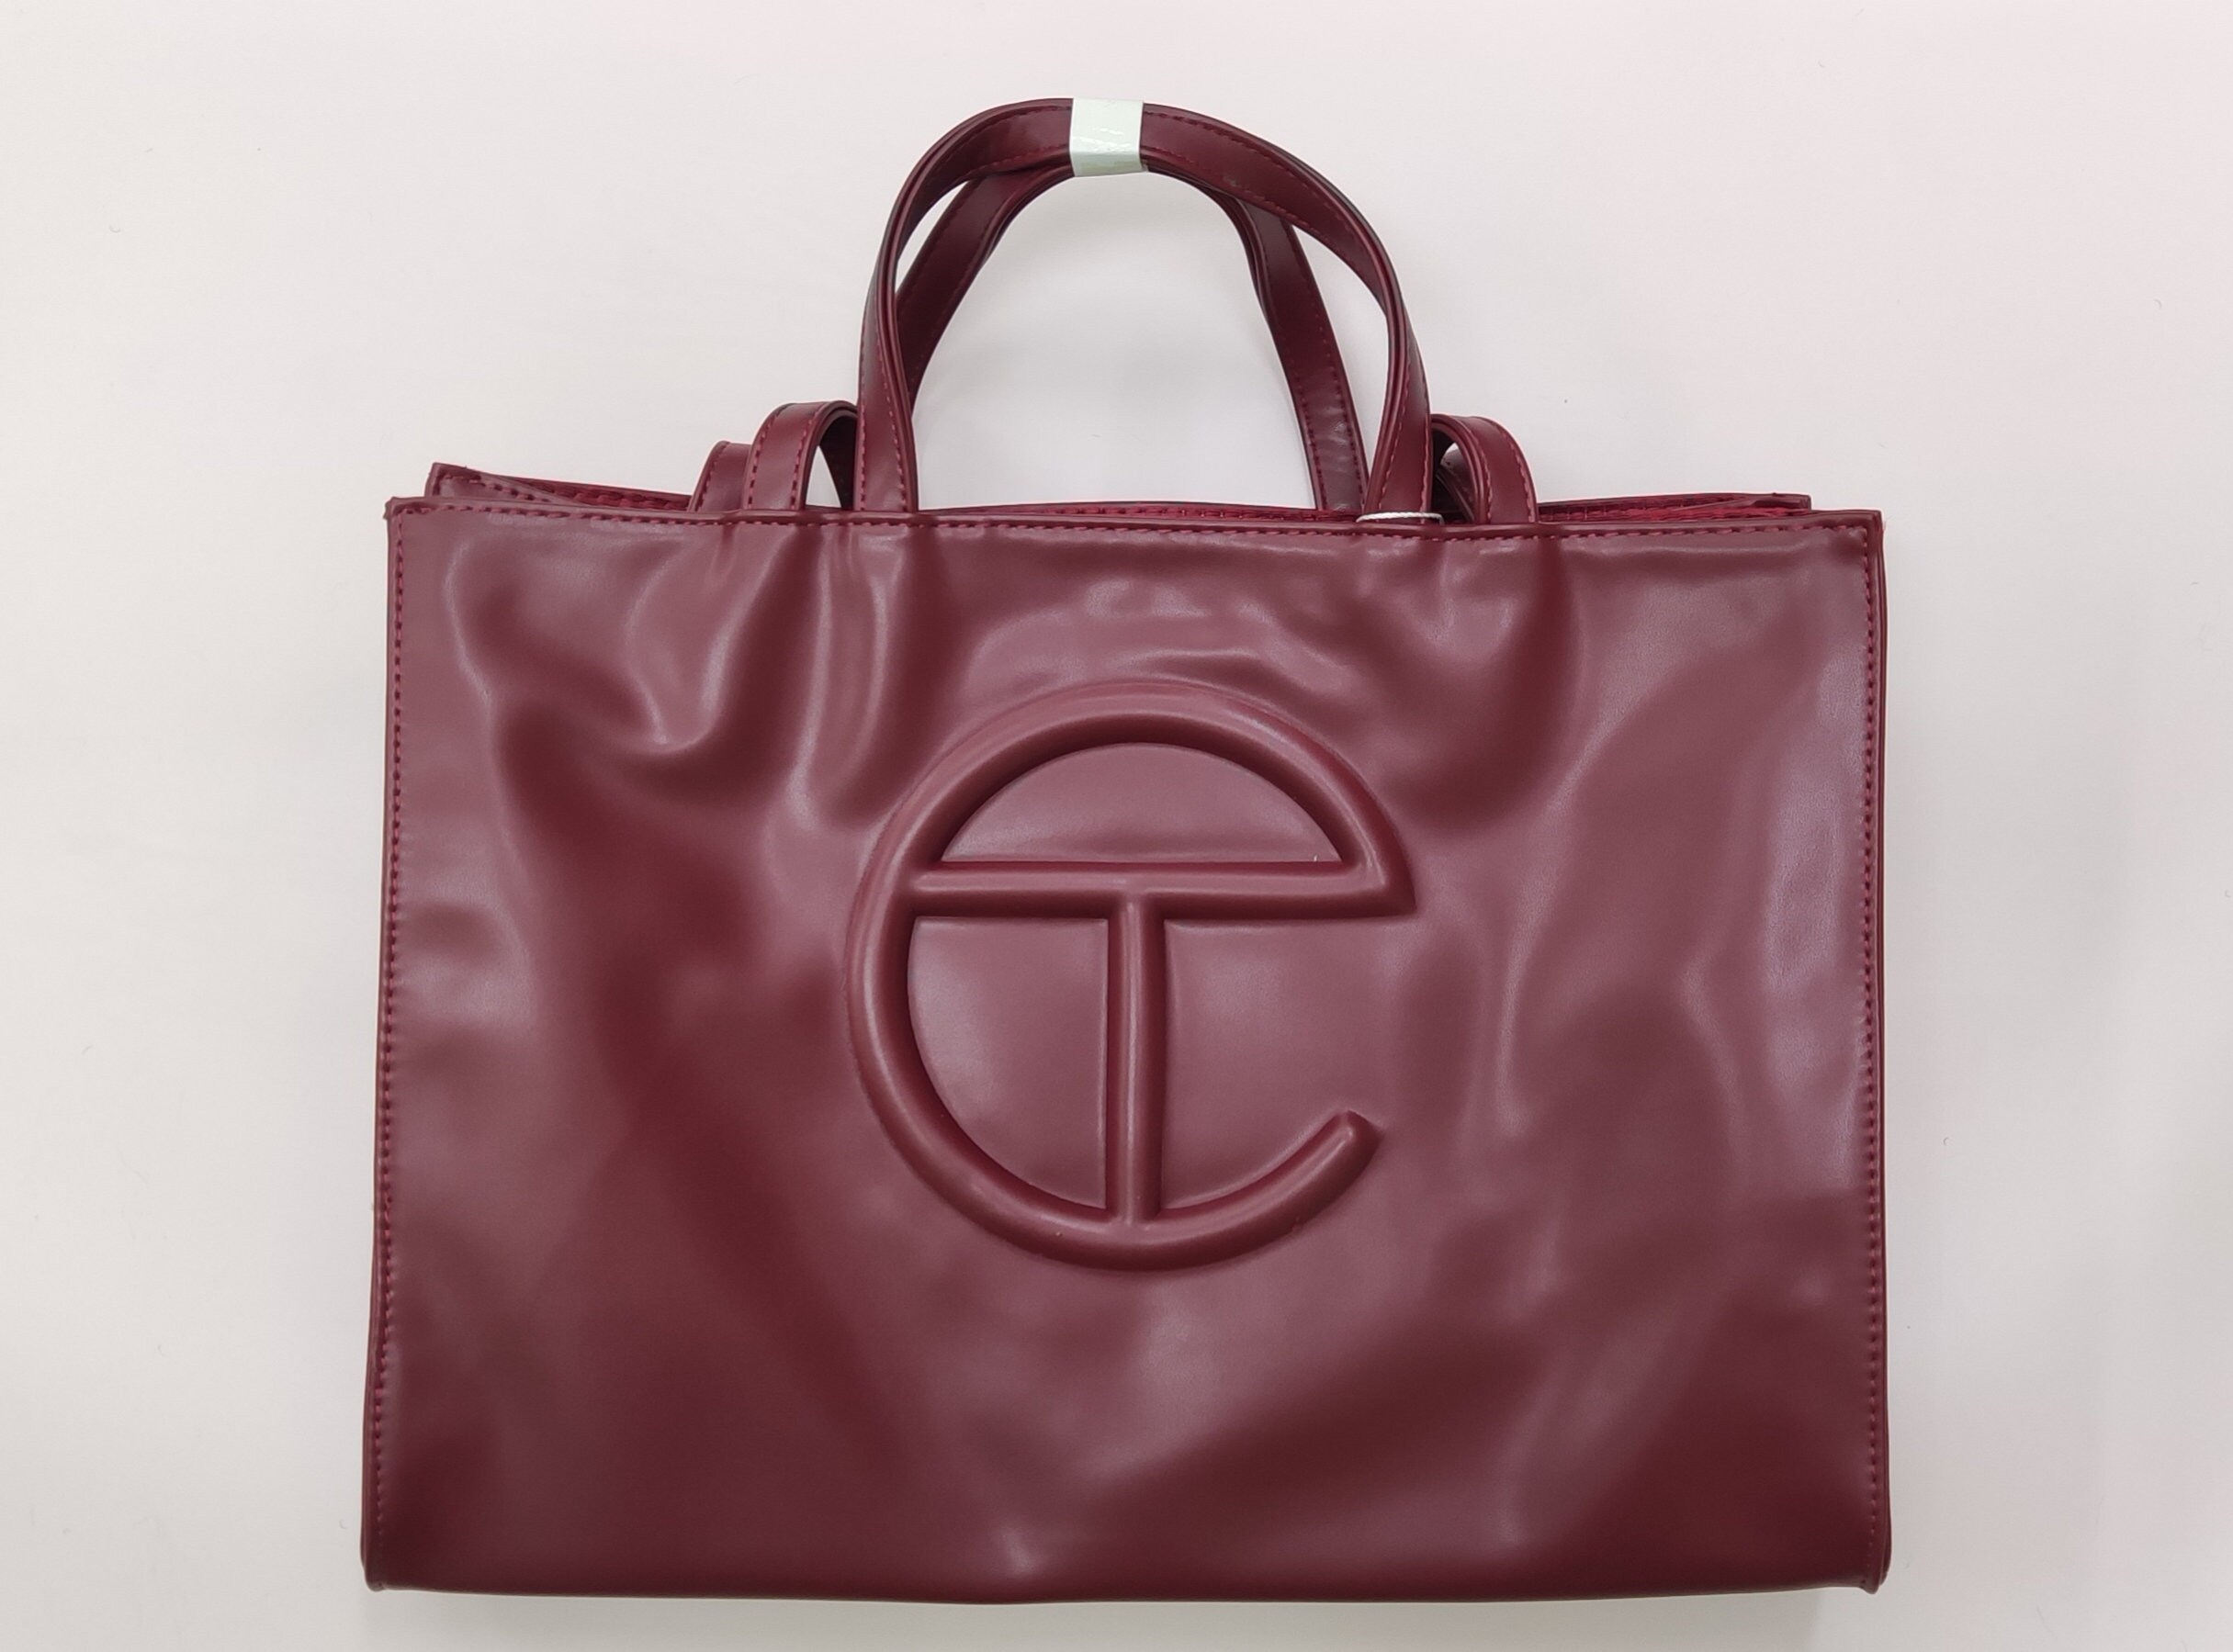 Telfar Women's Bag